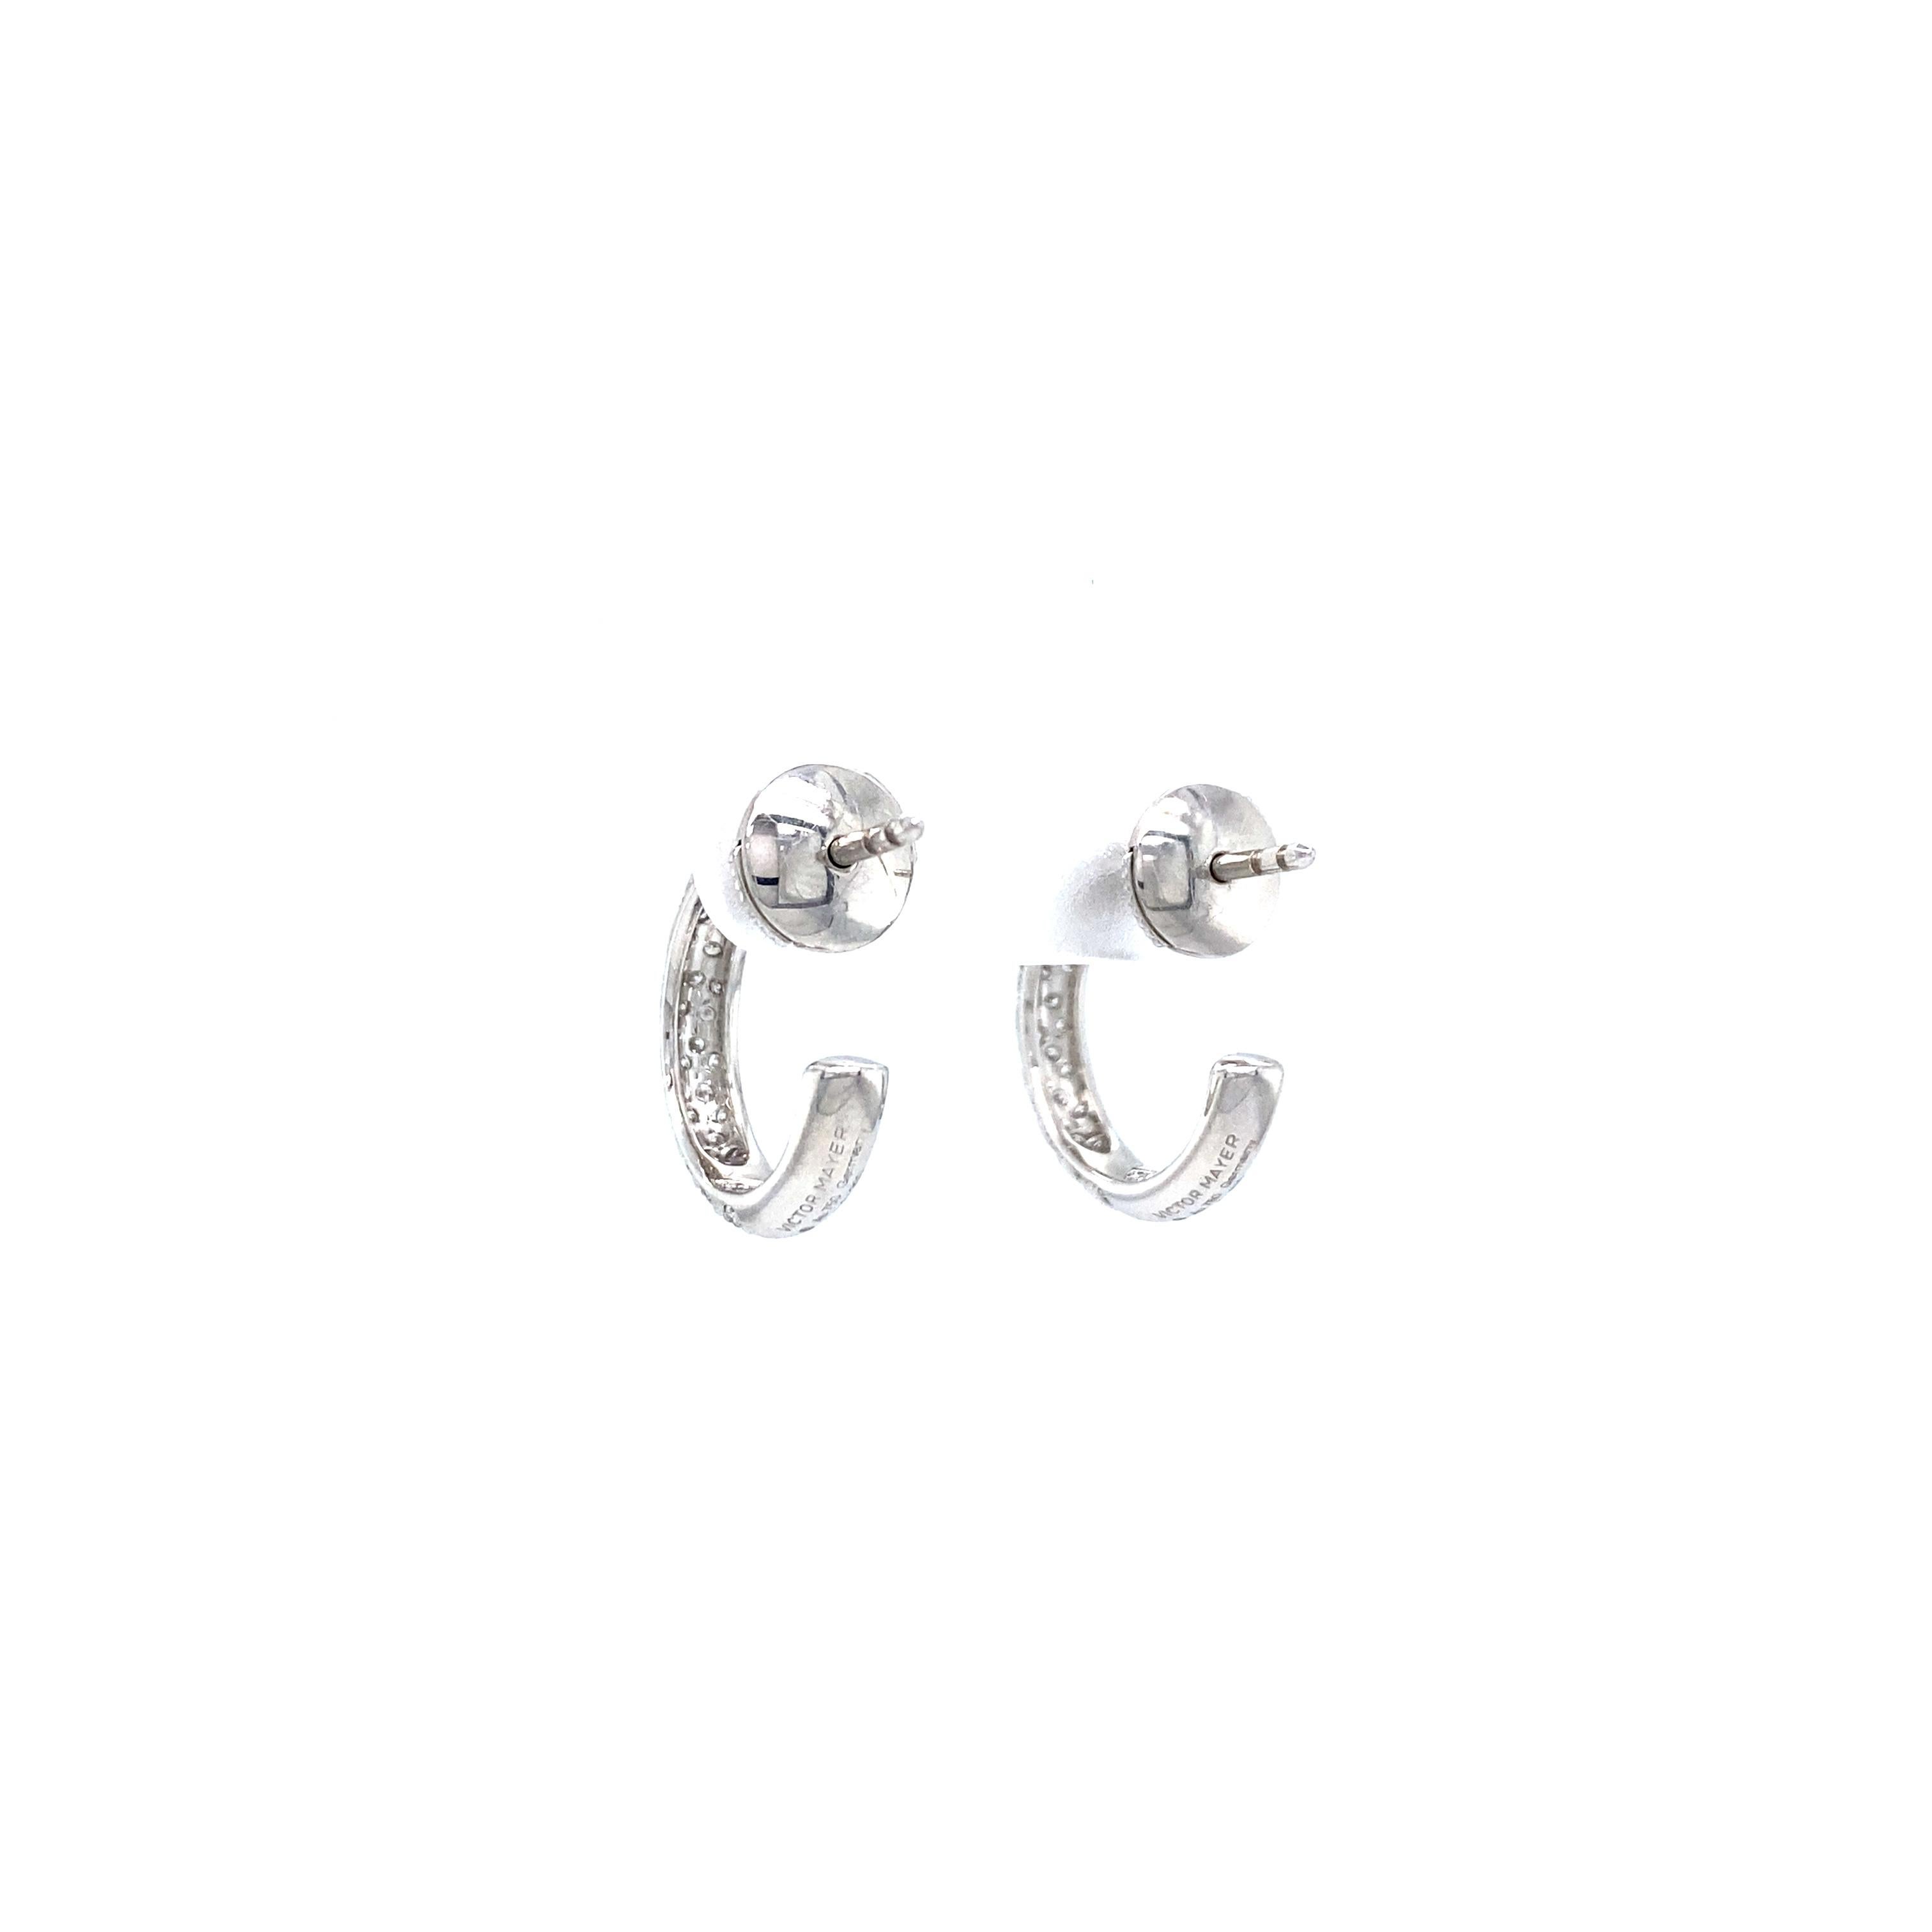 Round Hoop Stud Earrings 18k White Gold 104 Diamonds 0.52 ct G VS Width 3.4 mm For Sale 1